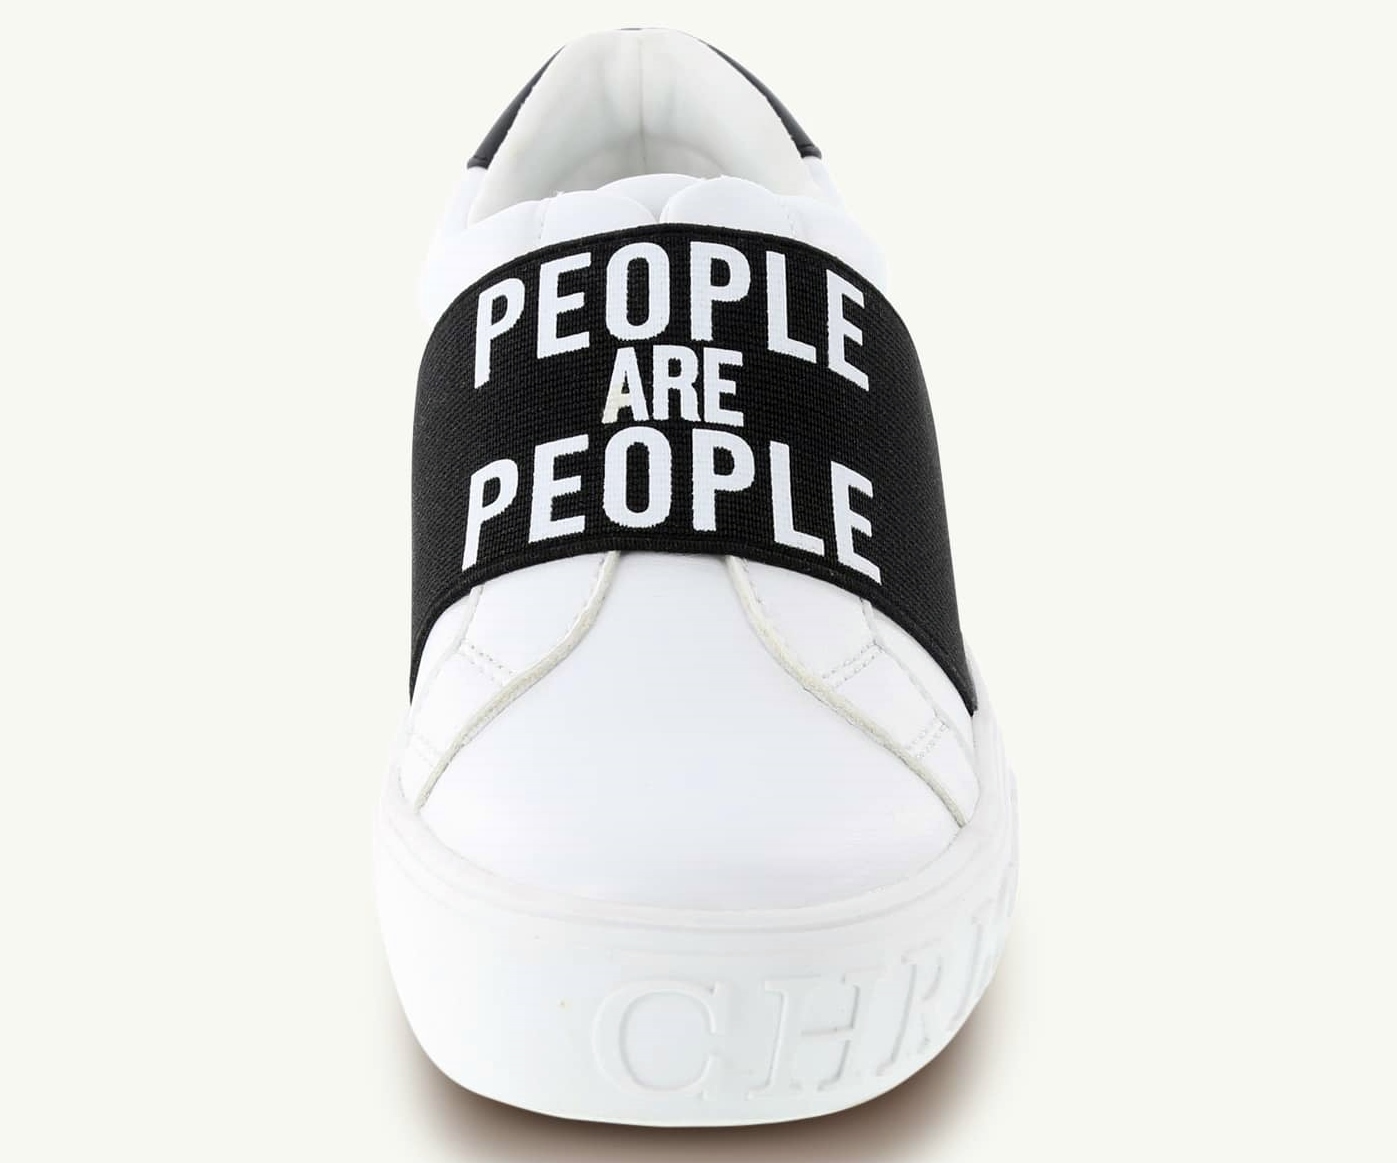 payless white platform sneakers